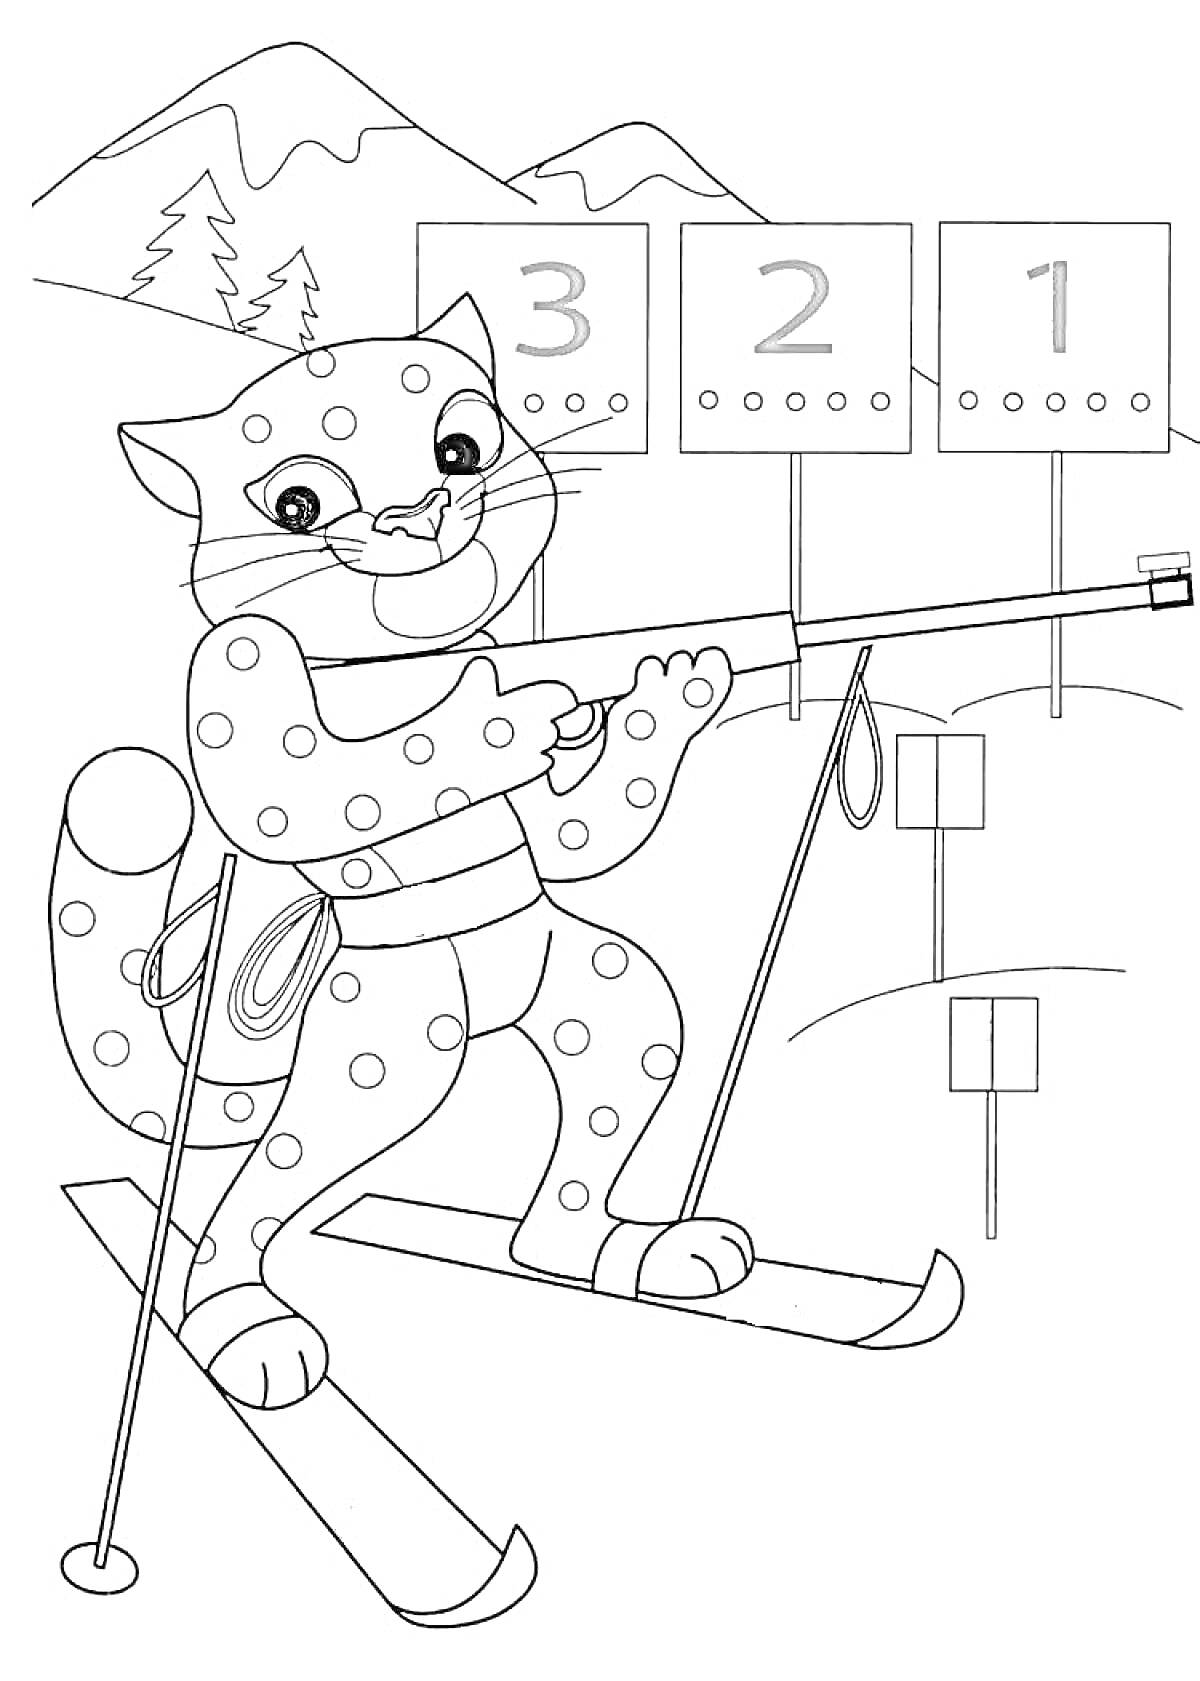 Леопард-спортсмен на лыжах, стреляющий из винтовки на фоне гор с табло 1, 2, 3